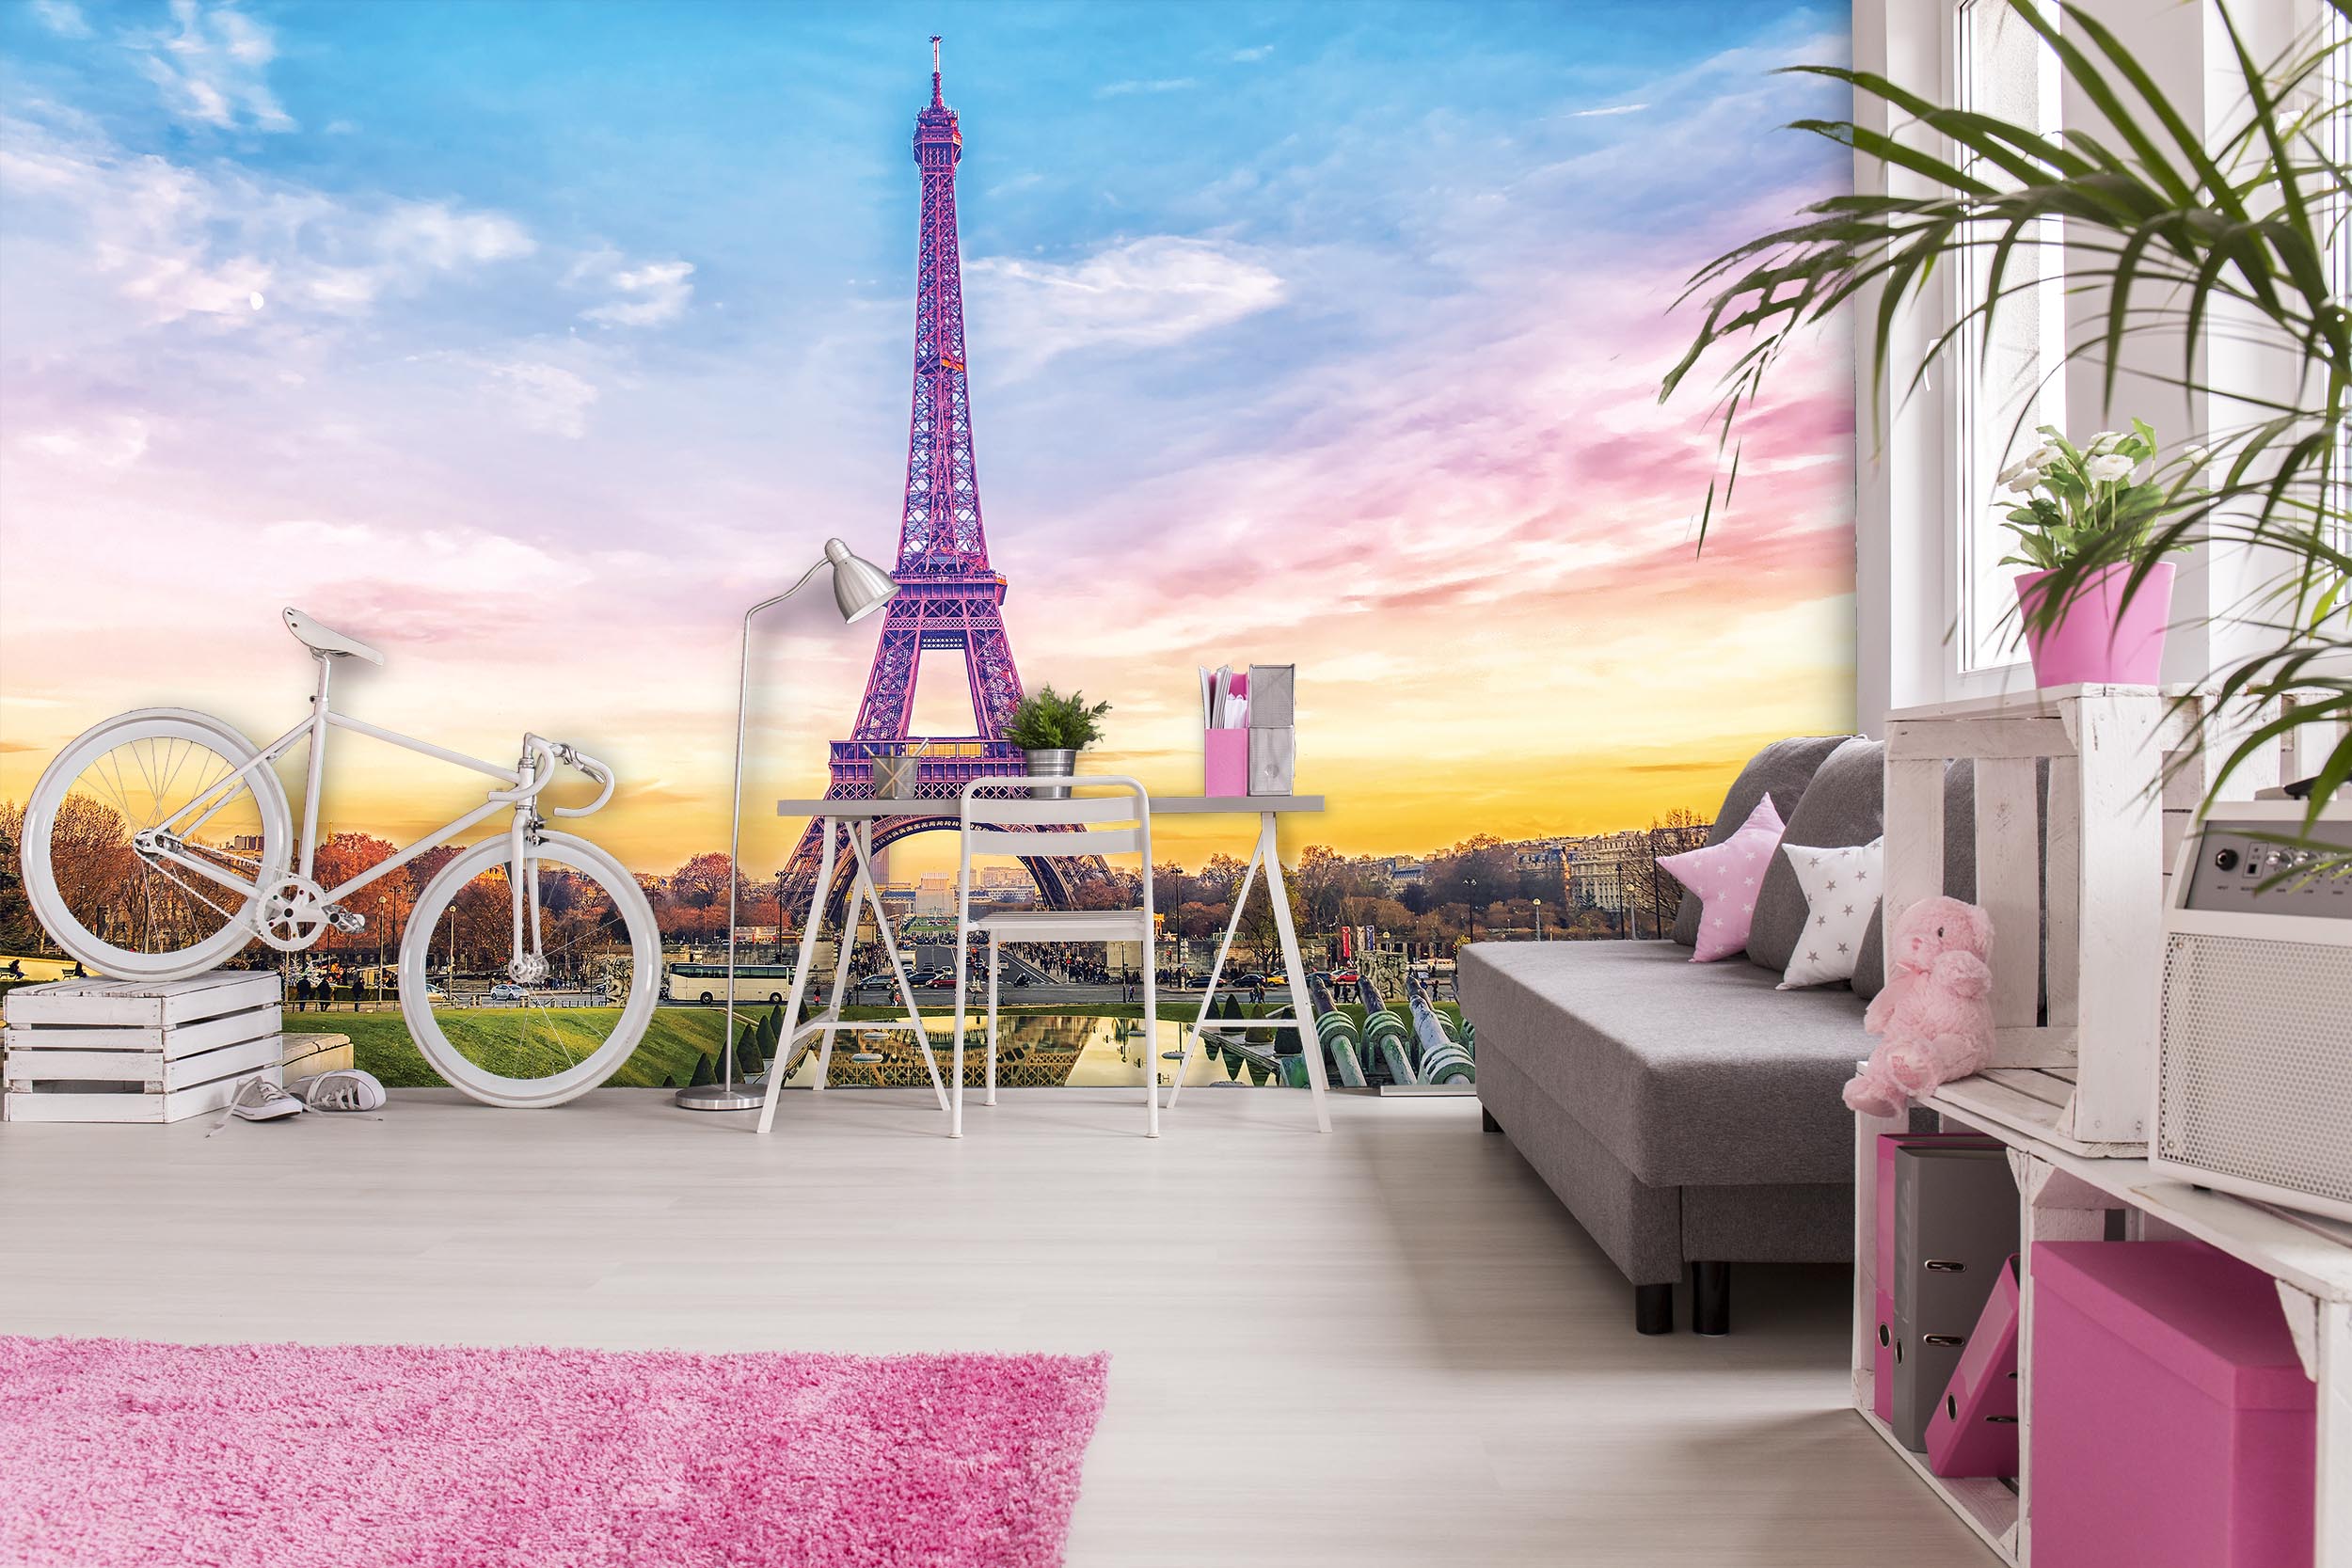 Tapeta Eiffelova věž fialová Vel (šířka x výška): 144 x 105 cm